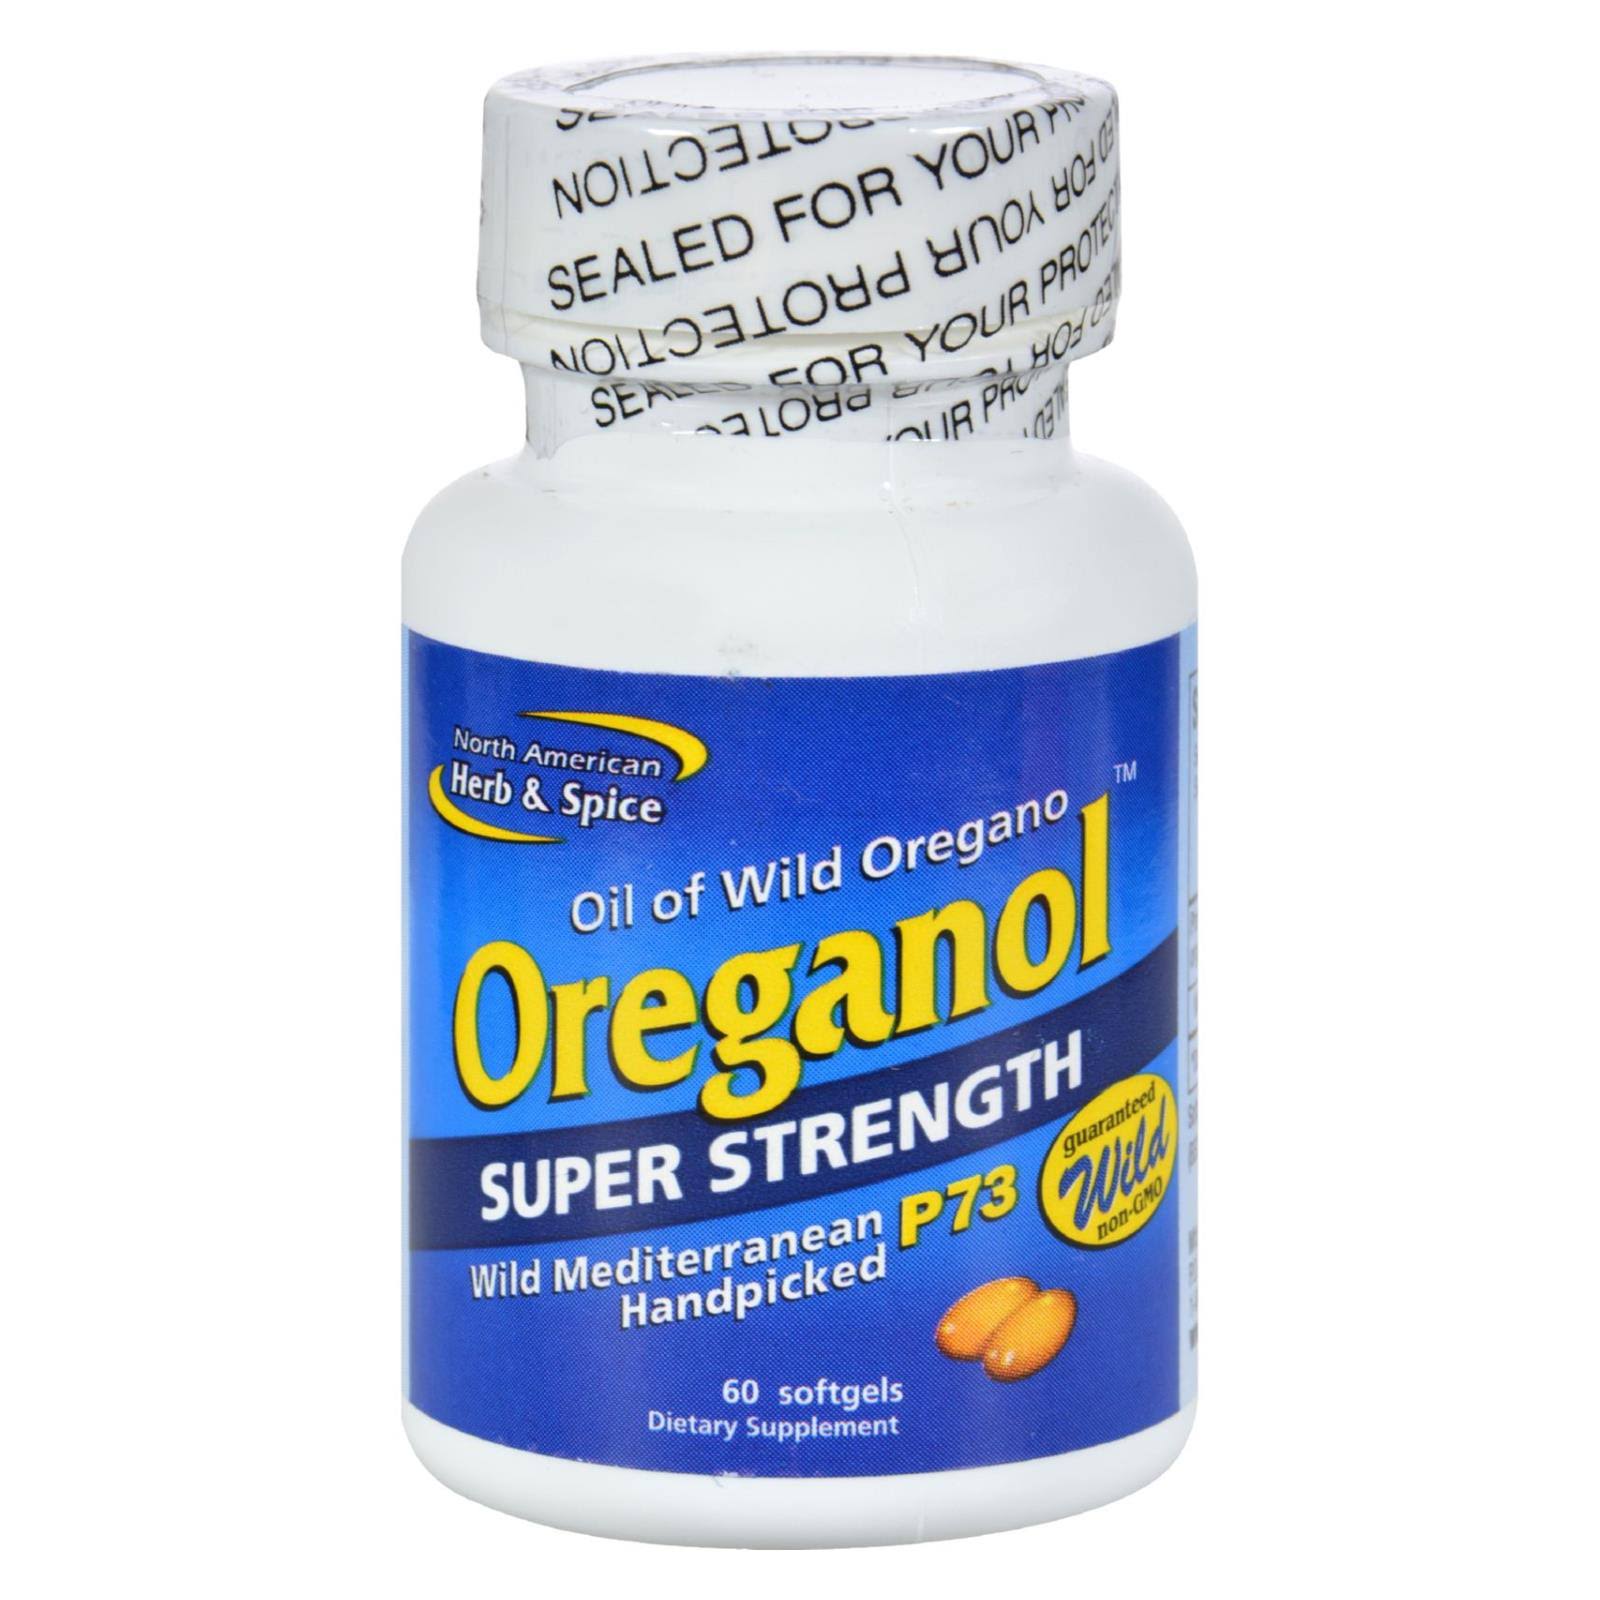 North American Herb & Spice Oreganol Super Strength Supplement - 60 Softgels